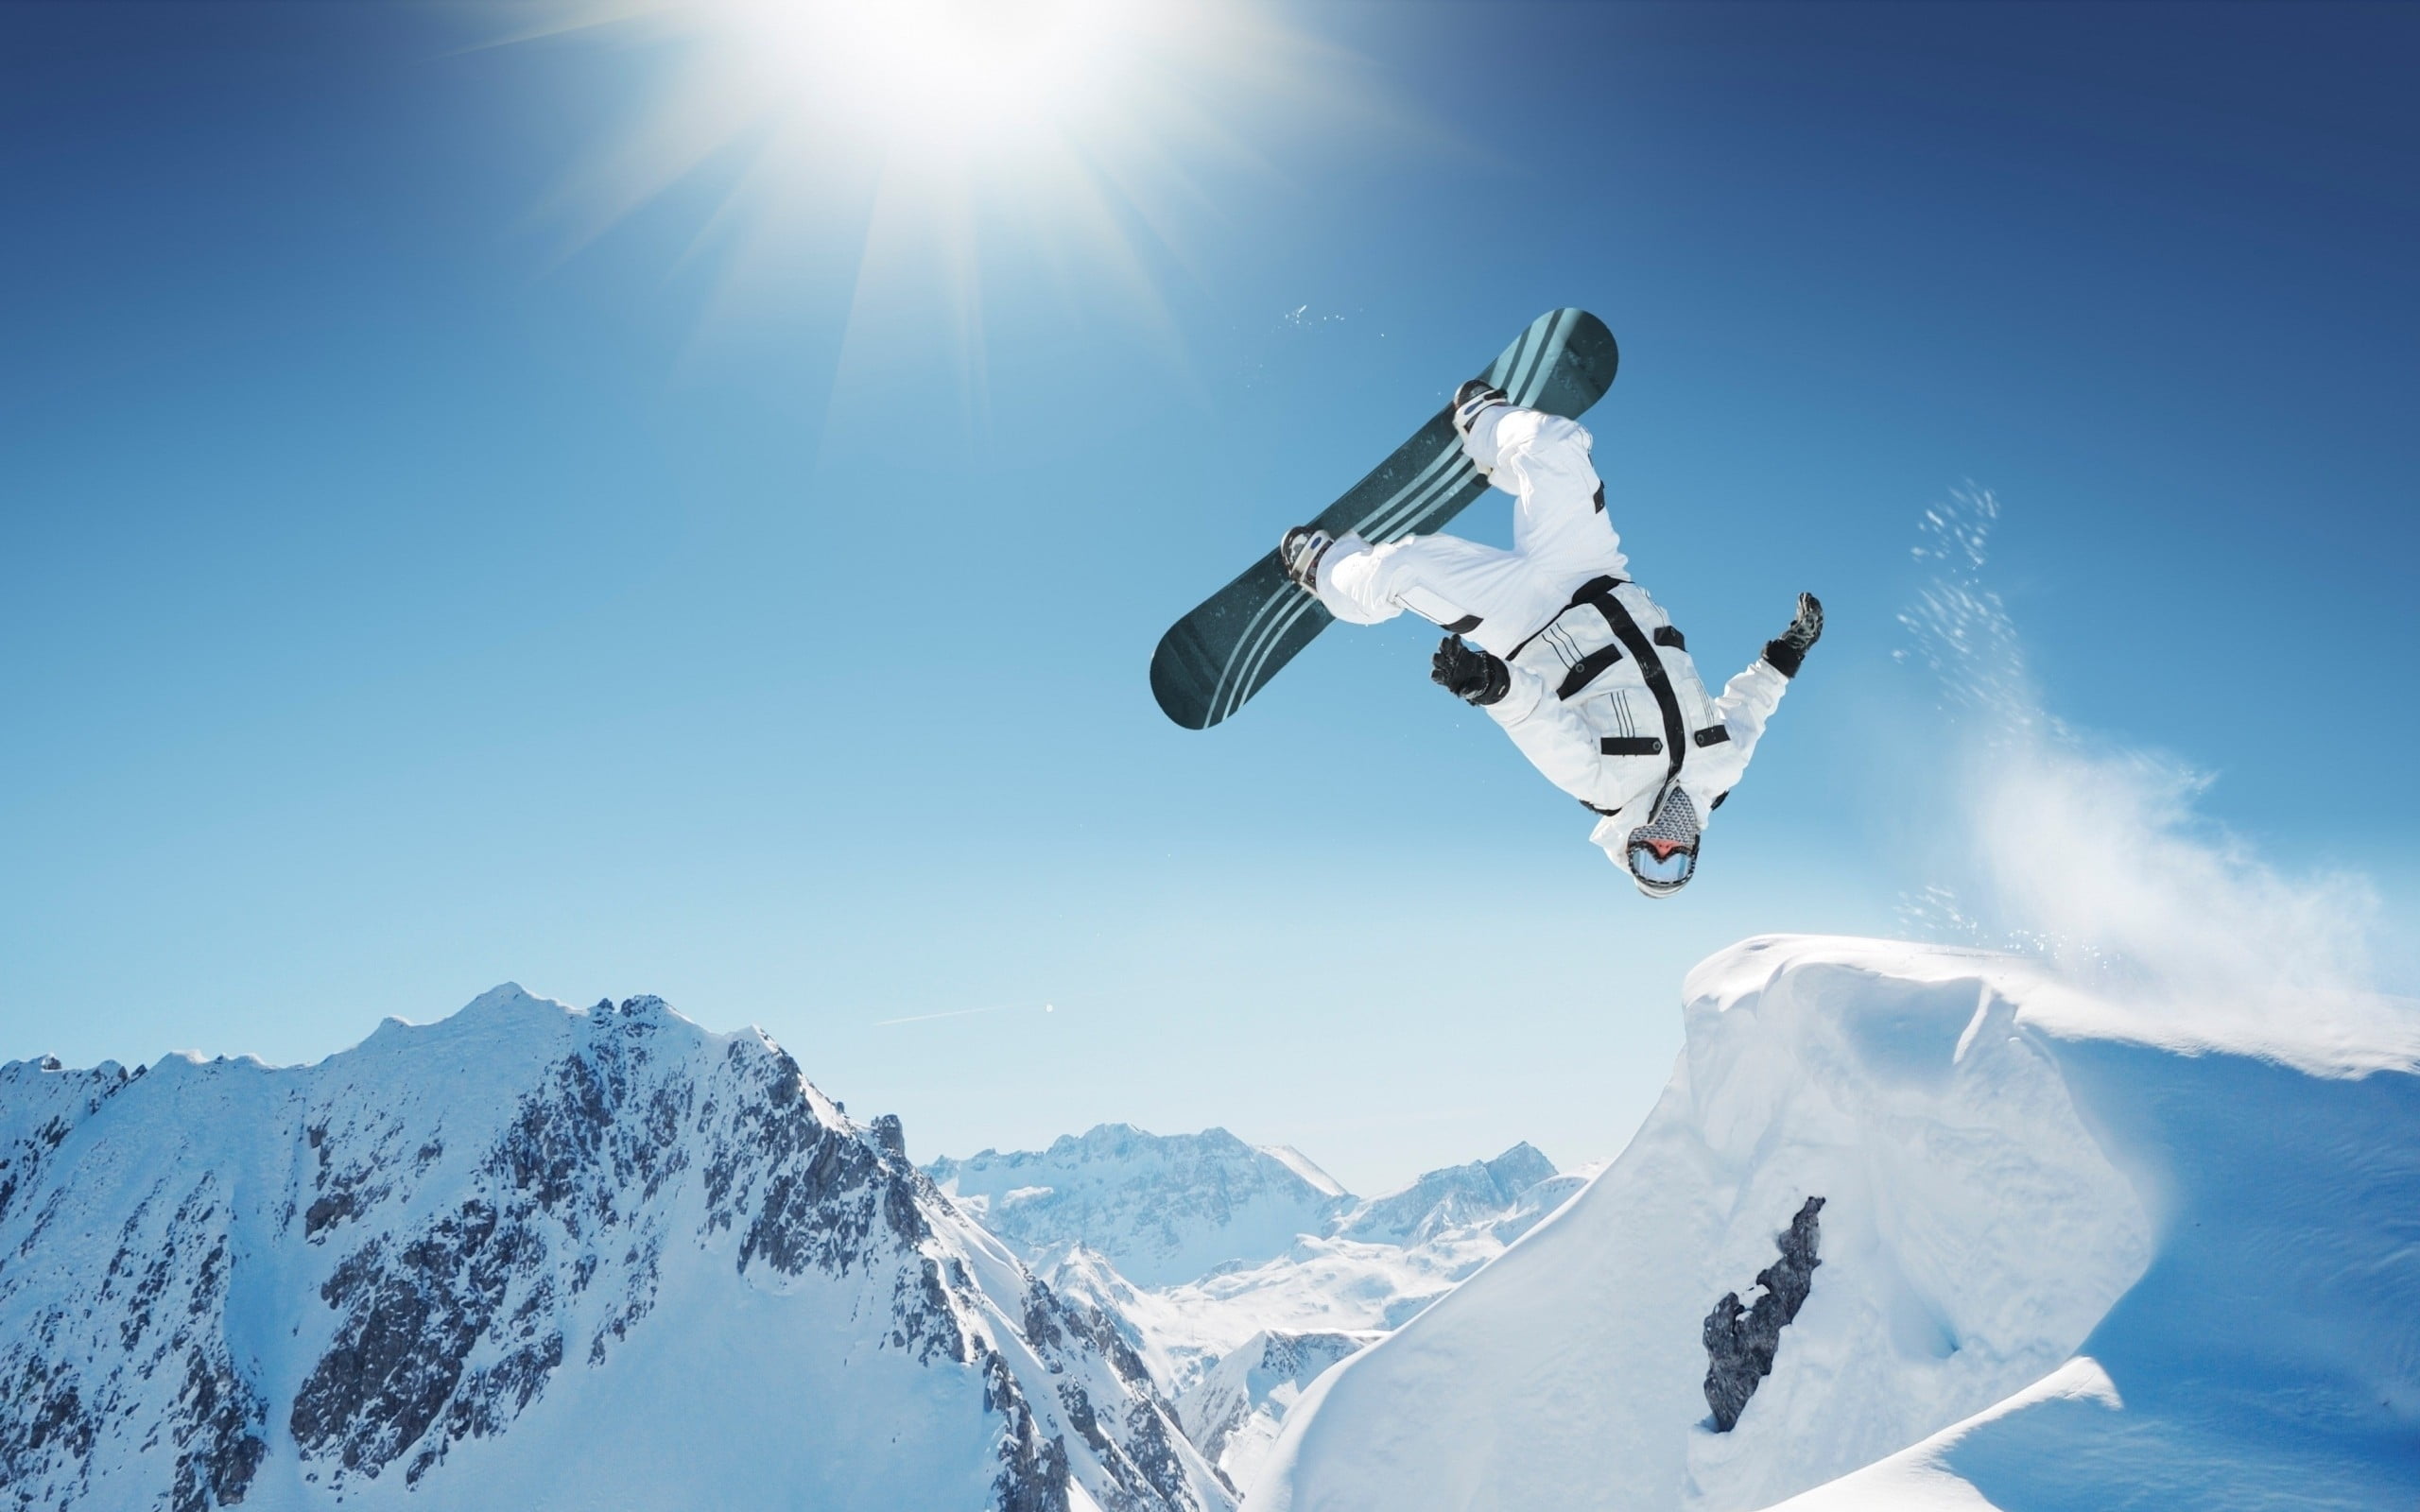 snowboarding-trick-jump-mountain-wallpaper.jpg